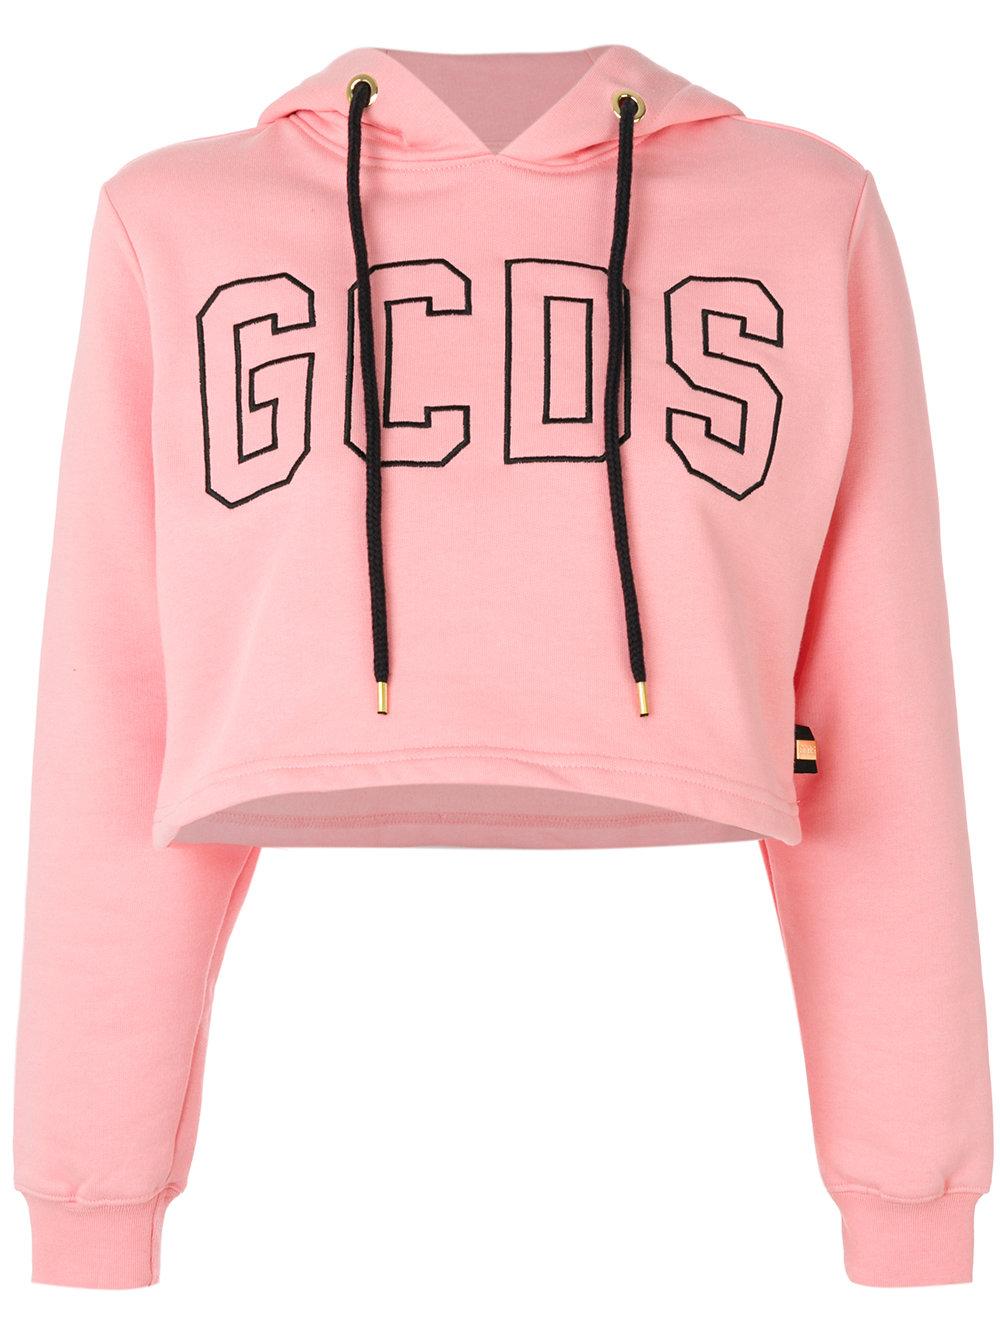 Lyst - Gcds Cropped Hoodie in Pink